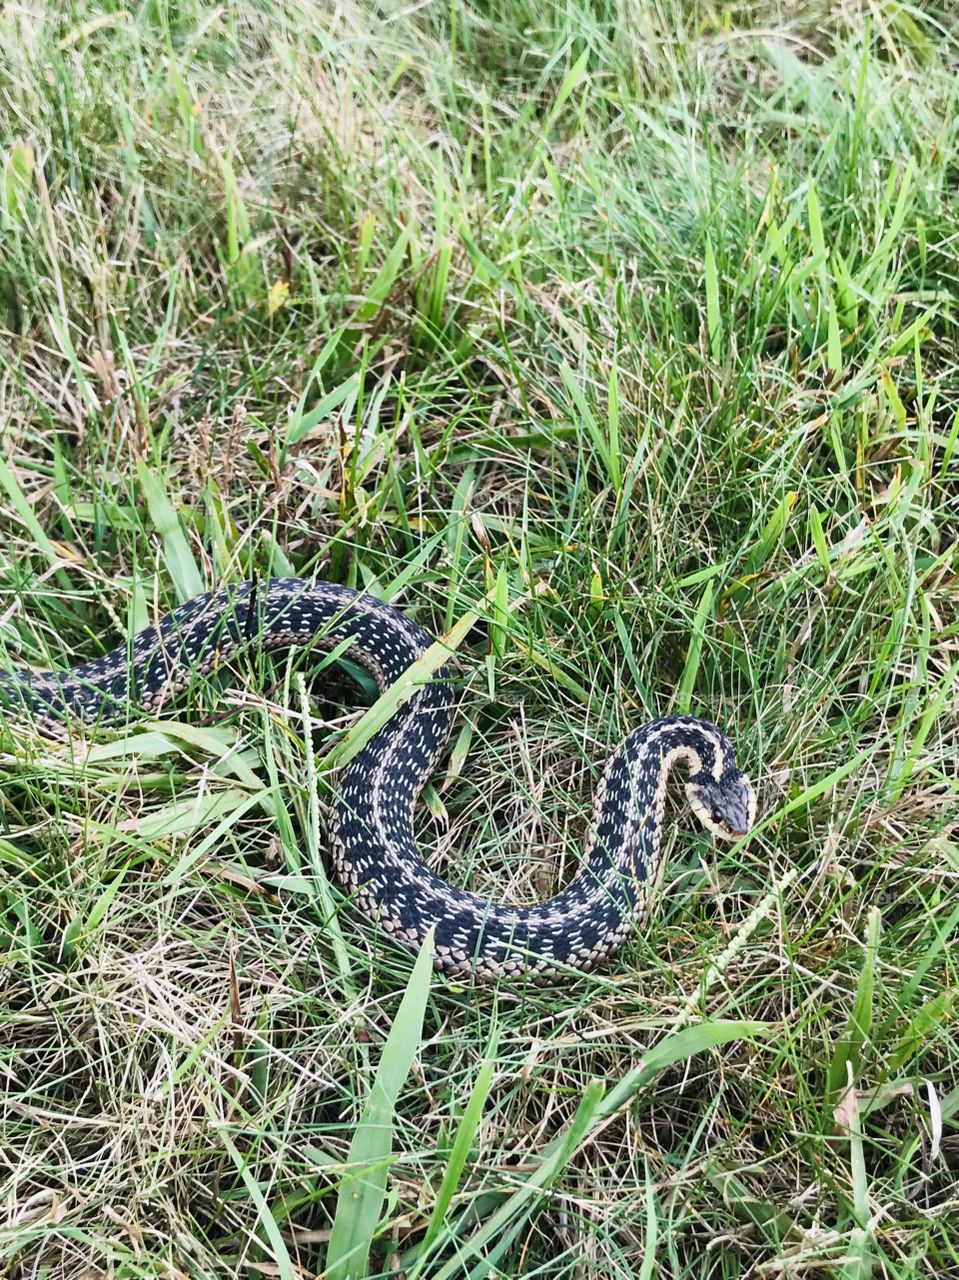 Snake in the summer grass